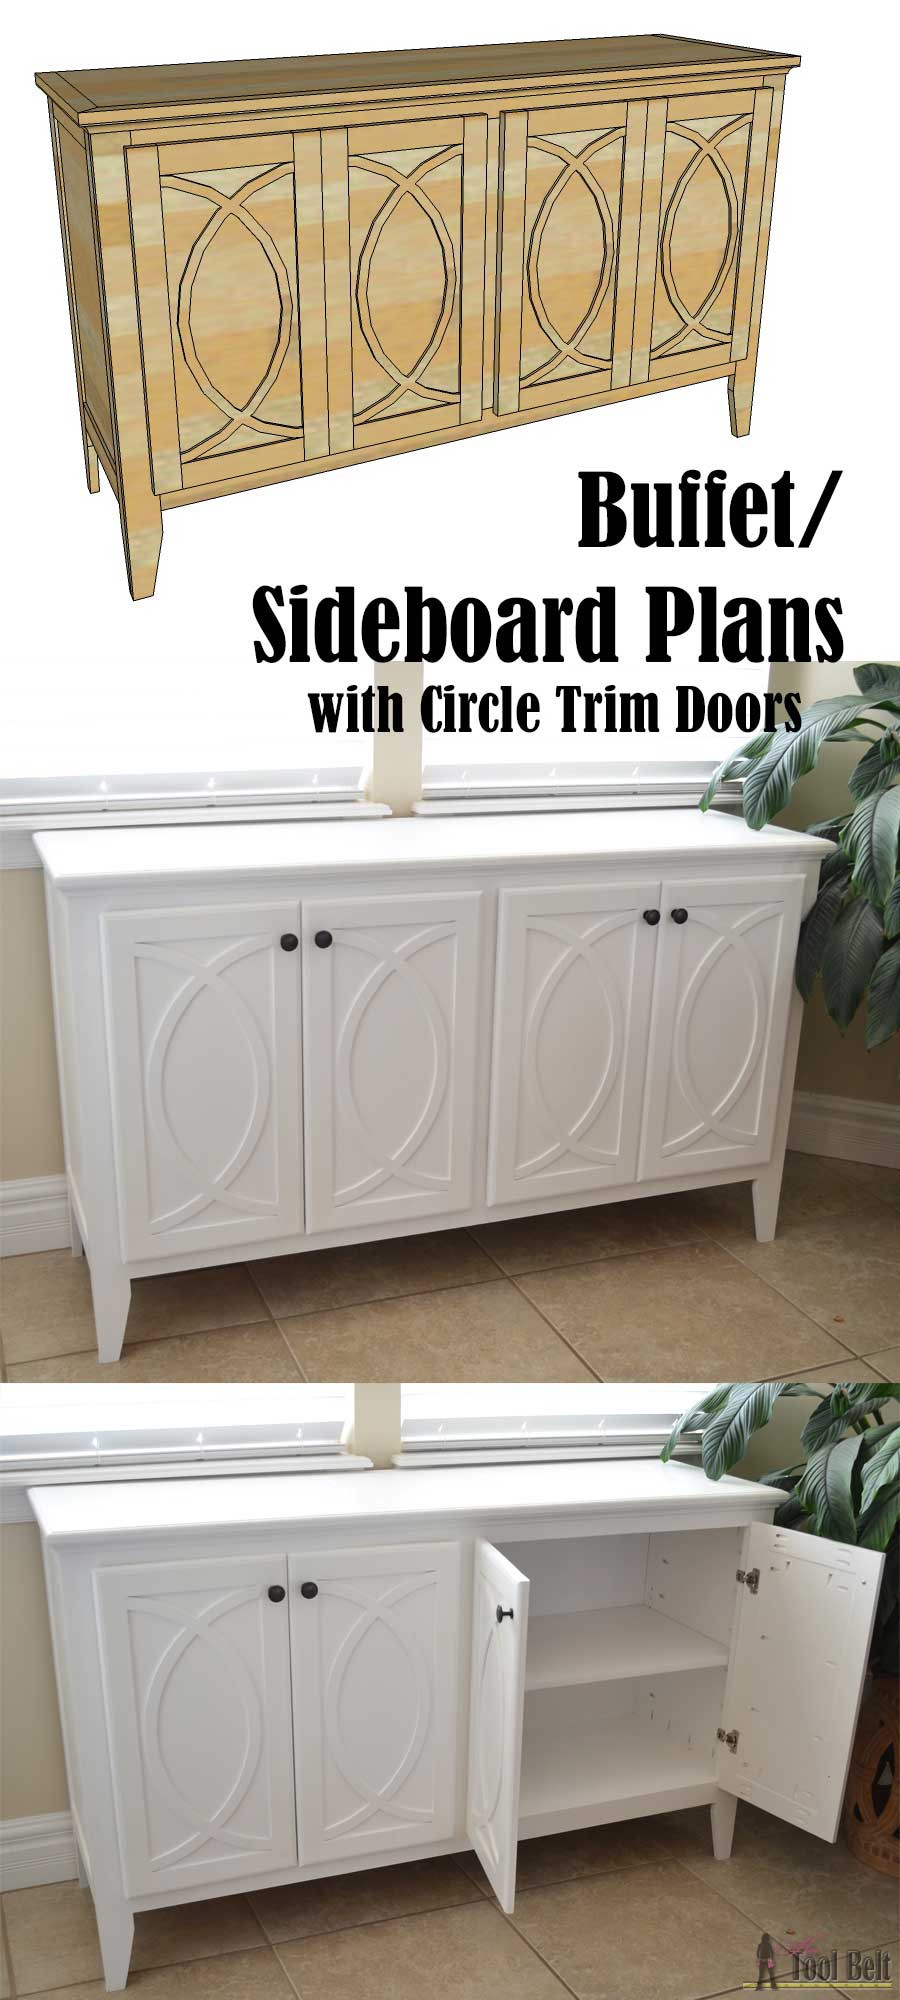 DIY Sideboard Plans
 DIY Buffet Sideboard with Circle Trim Doors Her Tool Belt